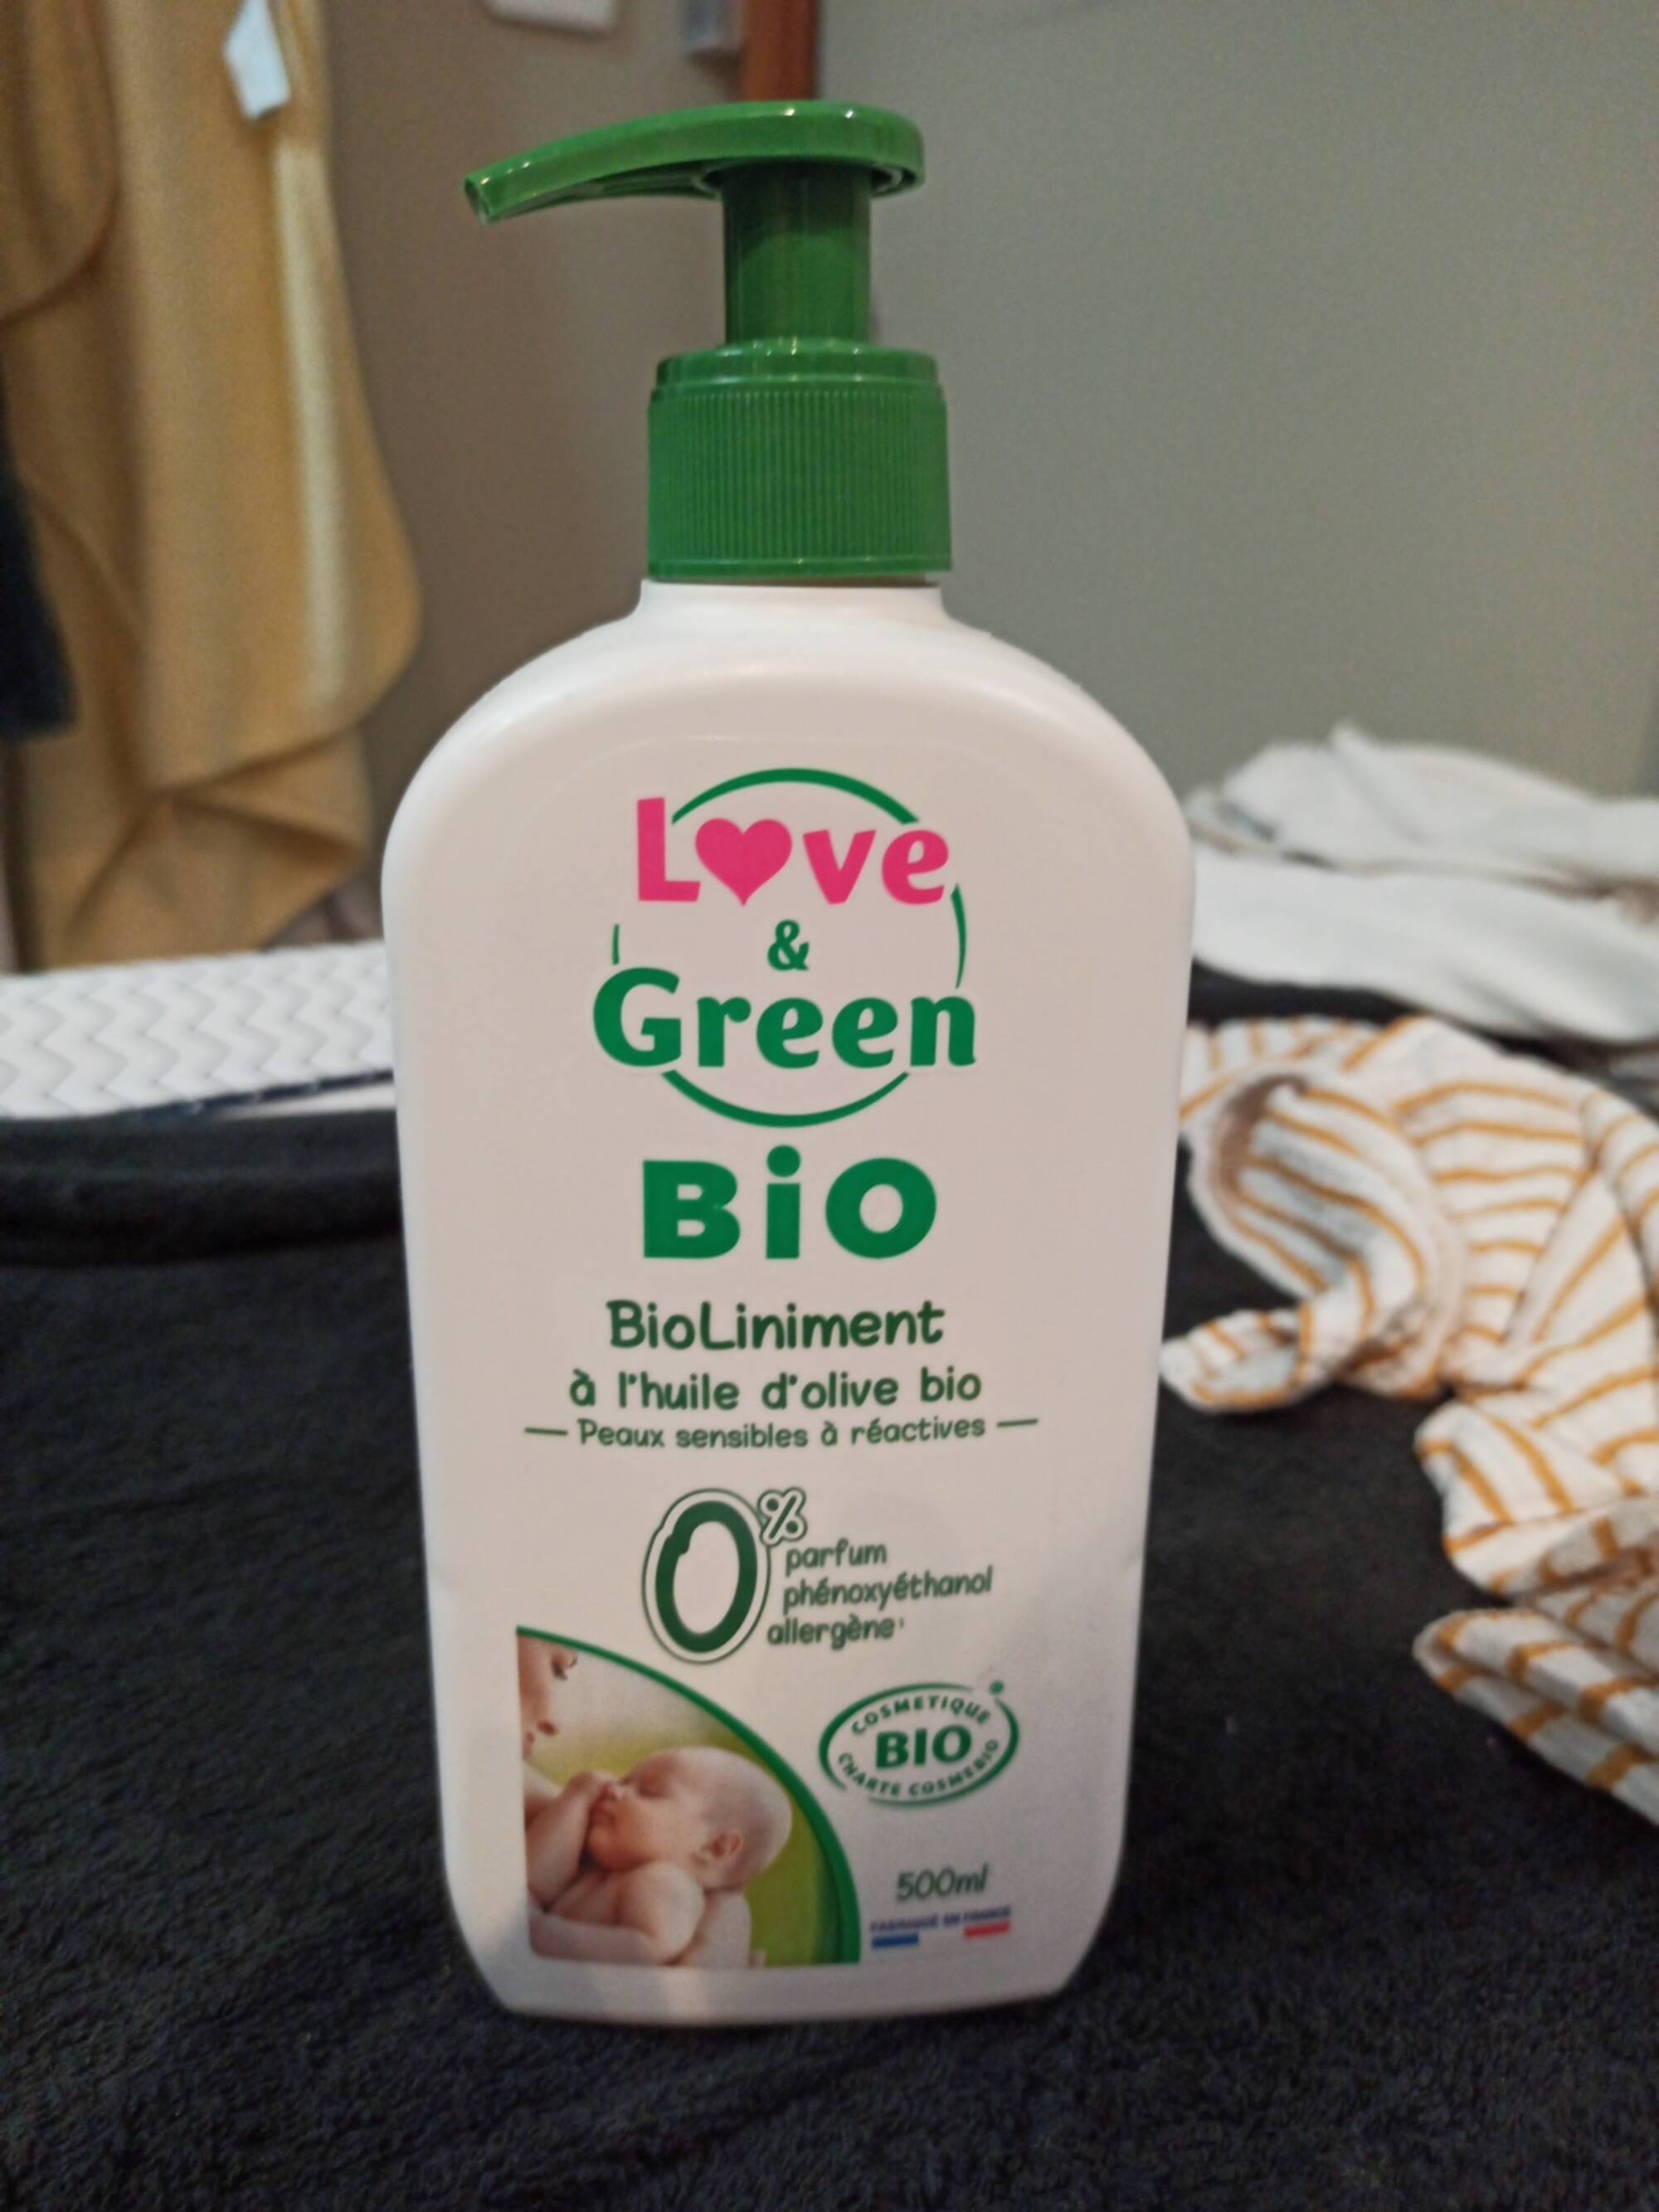 LOVE & GREEN - Comparatif Substances toxiques dans les cosmétiques